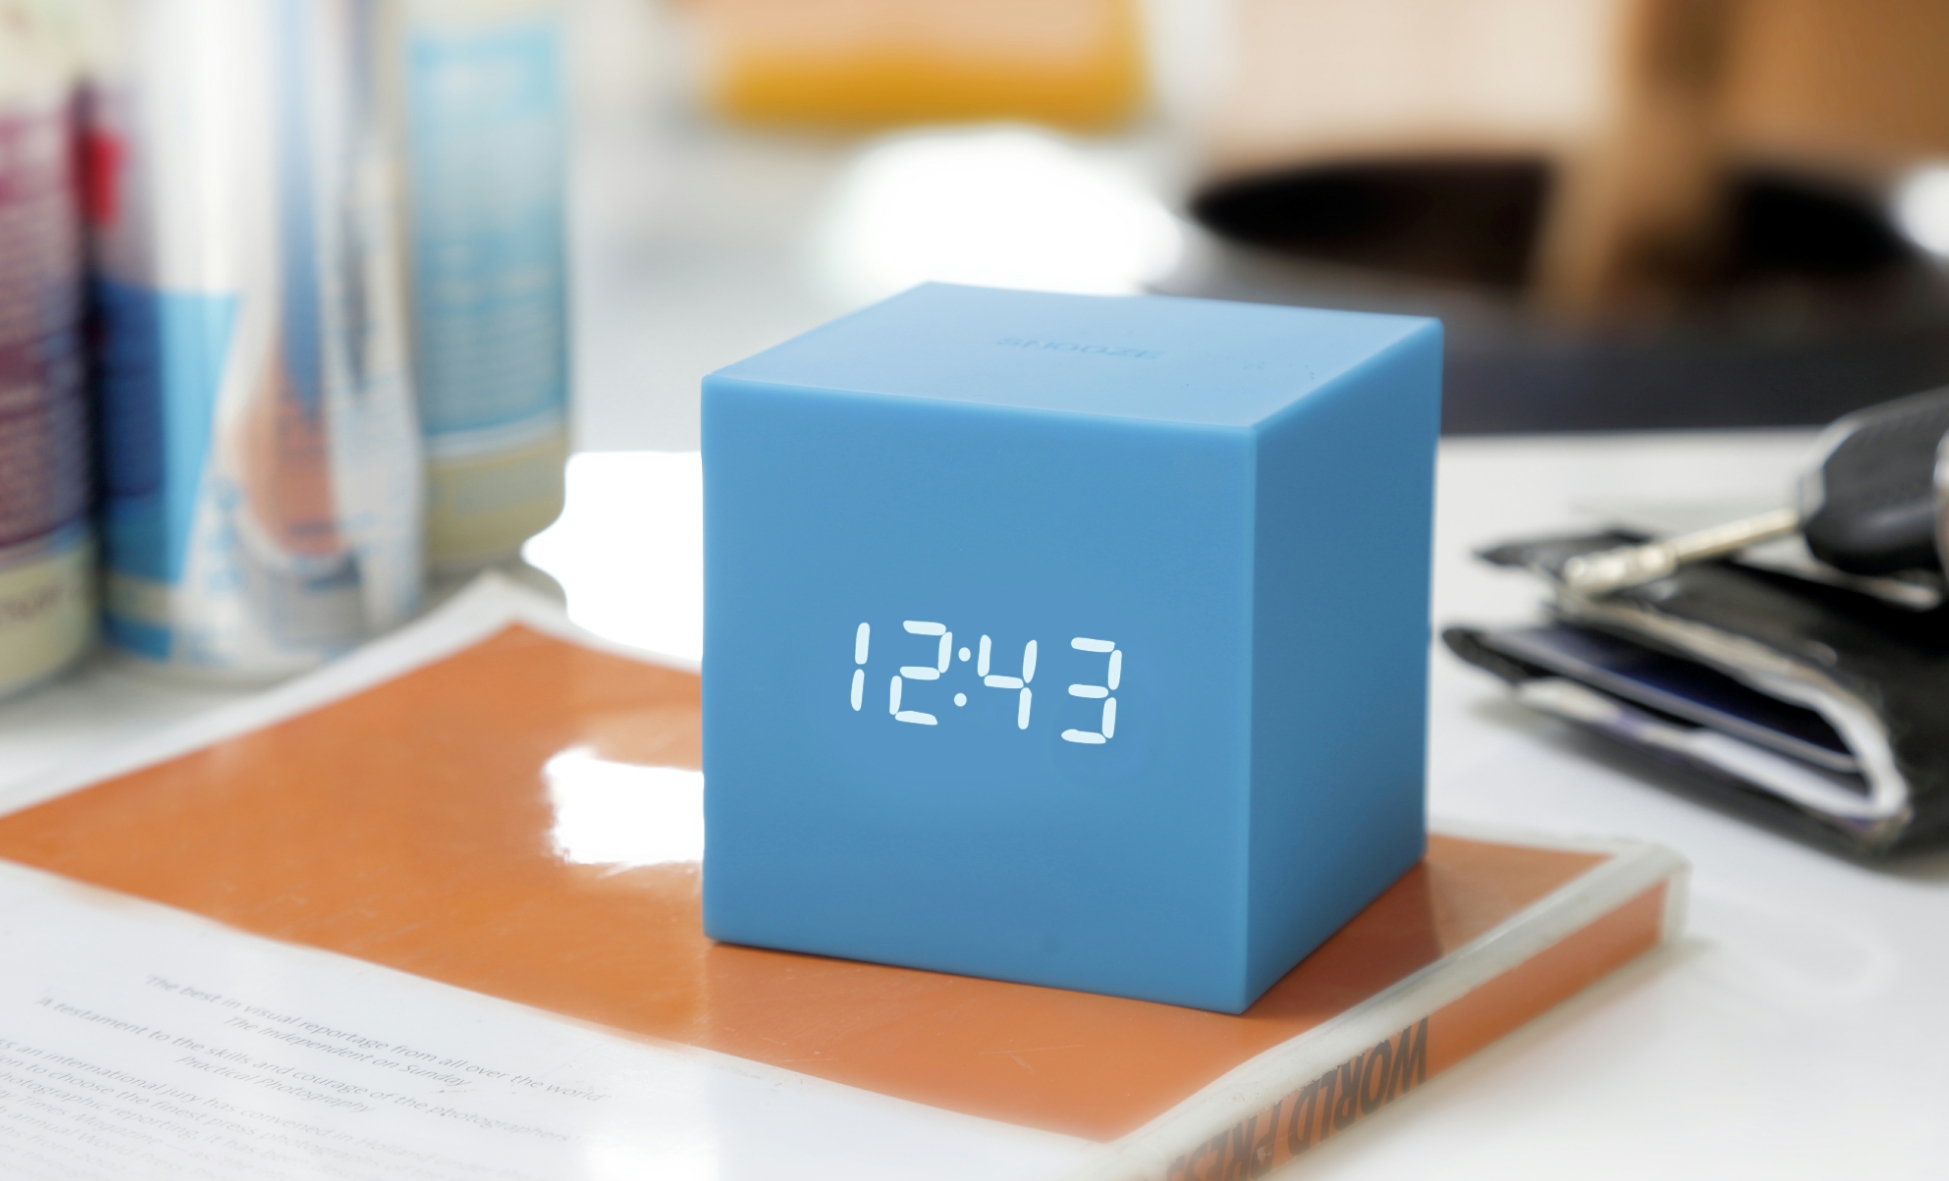 Gingko Gravity Cube Click Clock Bright Coloured Digital LED Display Alarm Clocks 